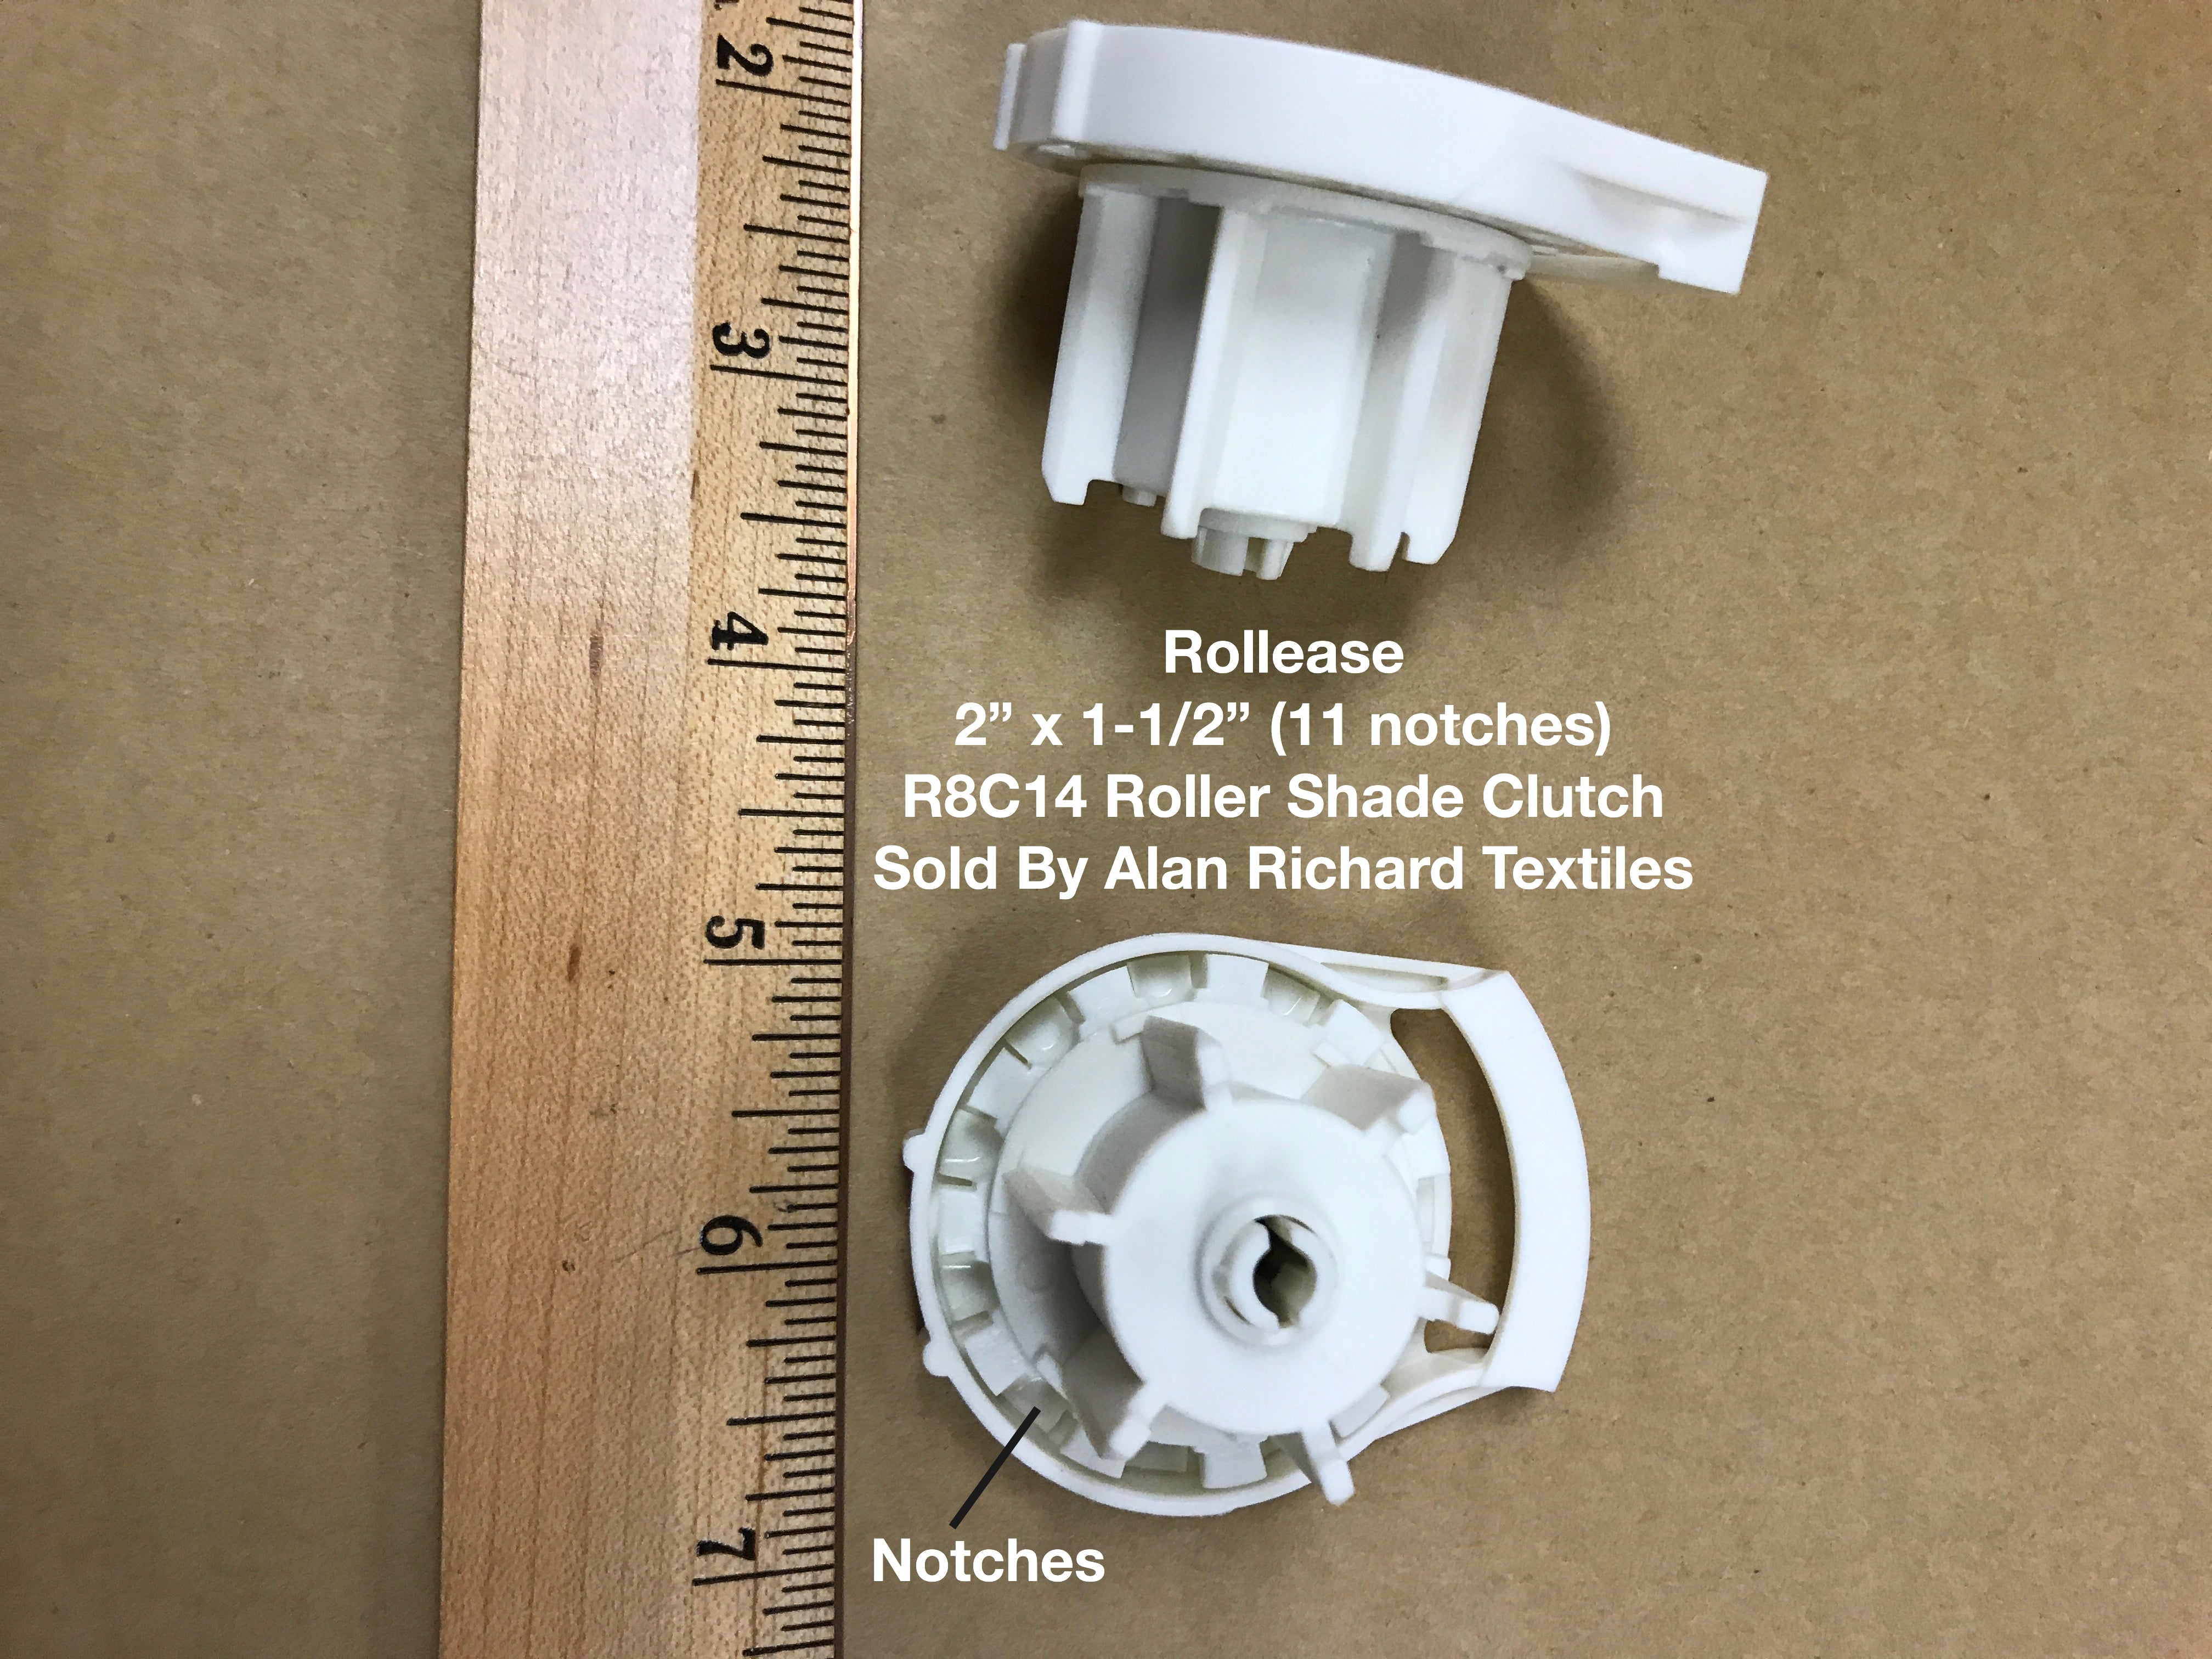 Rollease R8C14 Roller Shade Clutch